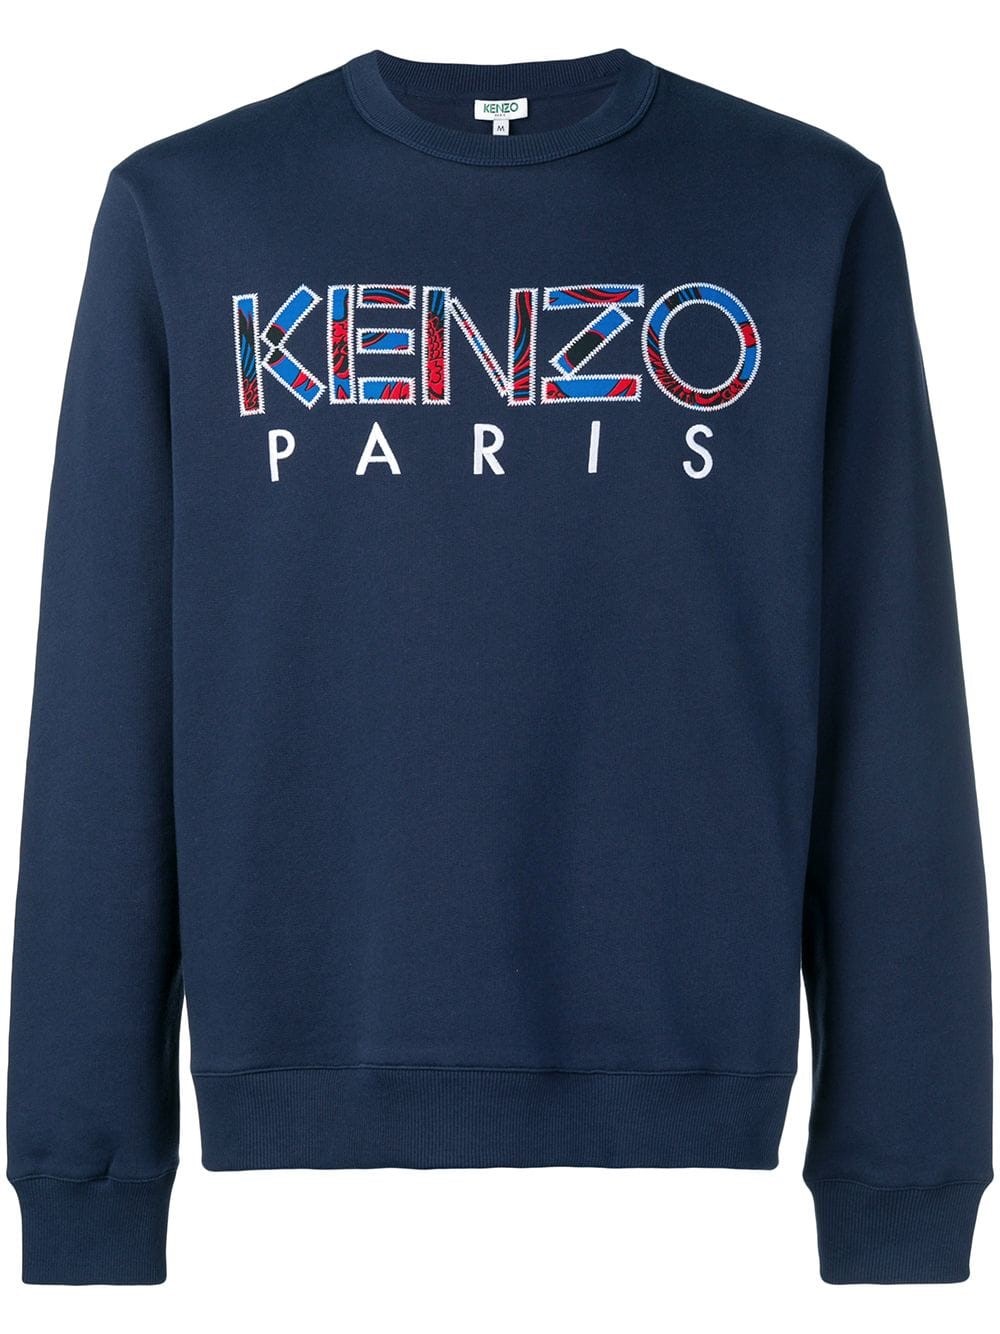 kenzo paris sweater